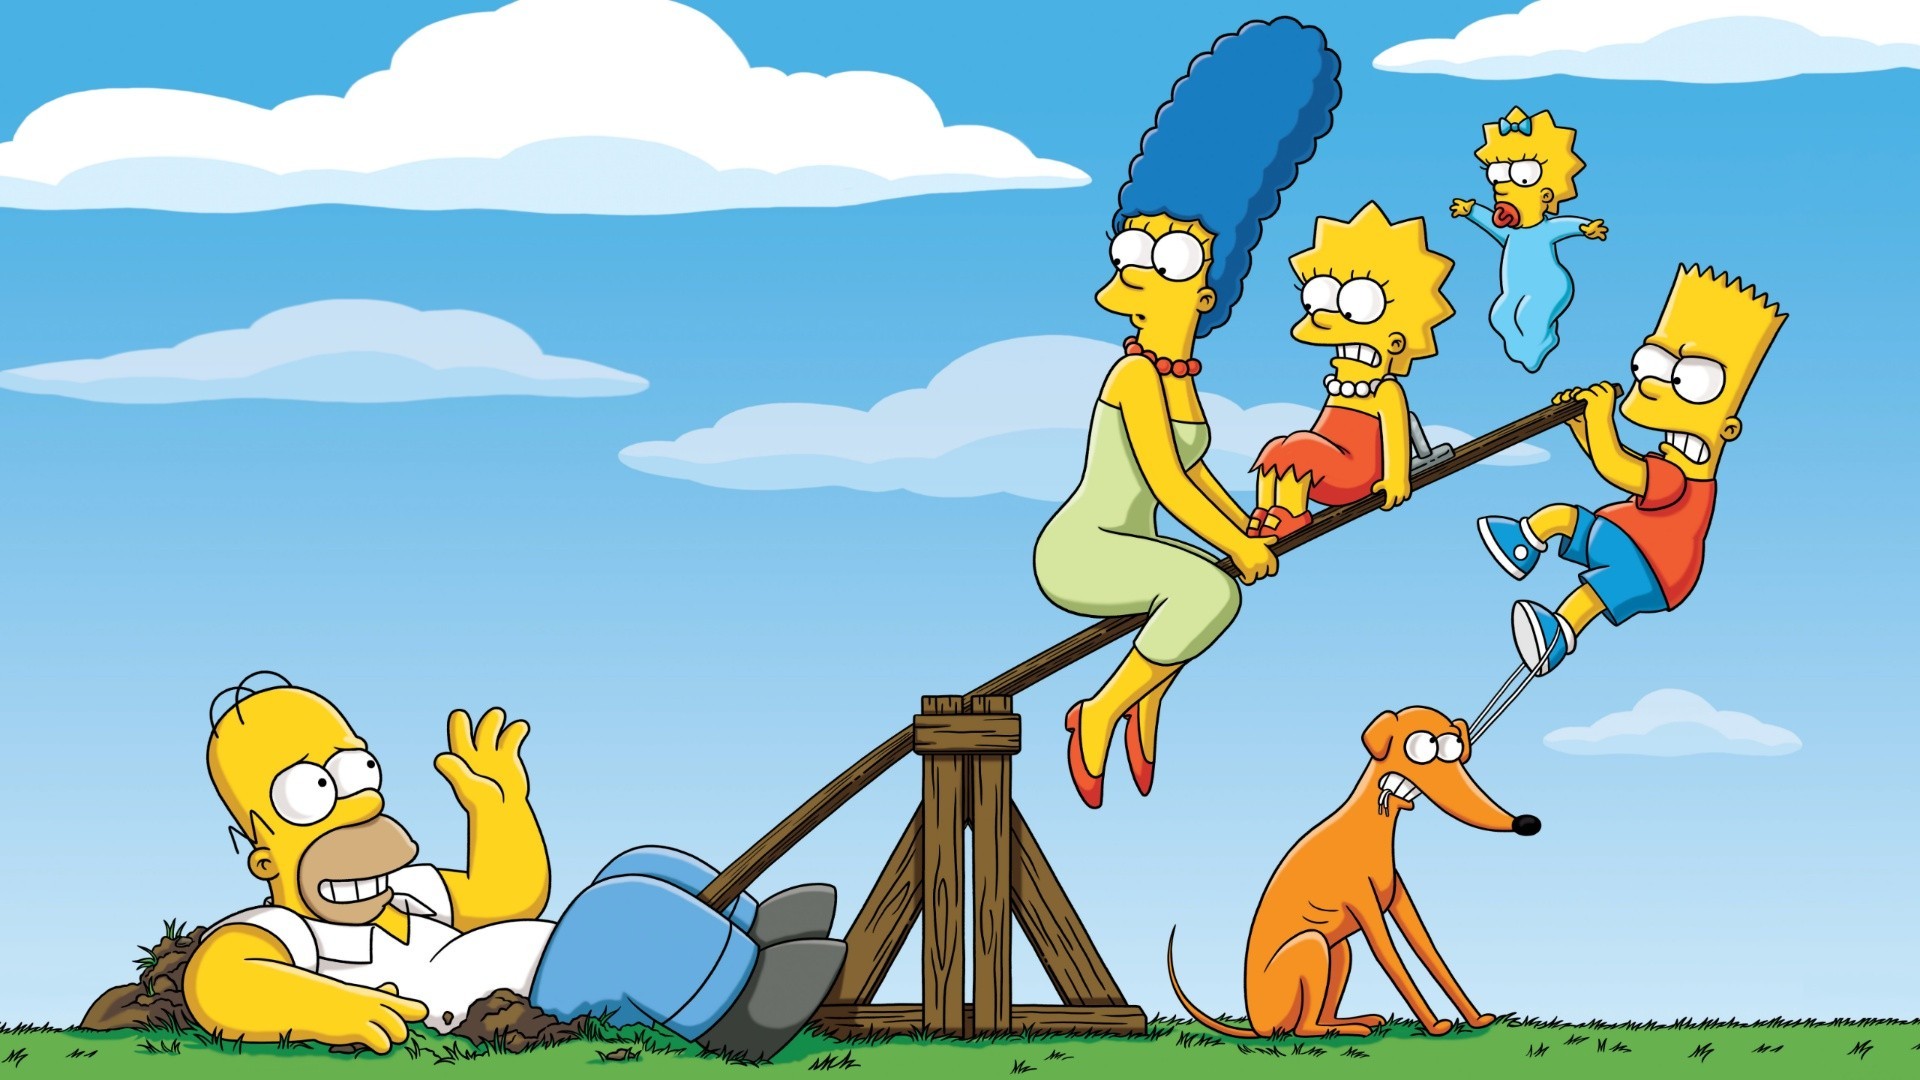 Baixar papel de parede para celular de Homer Simpson, Programa De Tv, Bart Simpson, Lisa Simpson, Os Simpsons, Maggie Simpson, Marge Simpson, Ajudante Do Papai Noel (Os Simpsons) gratuito.